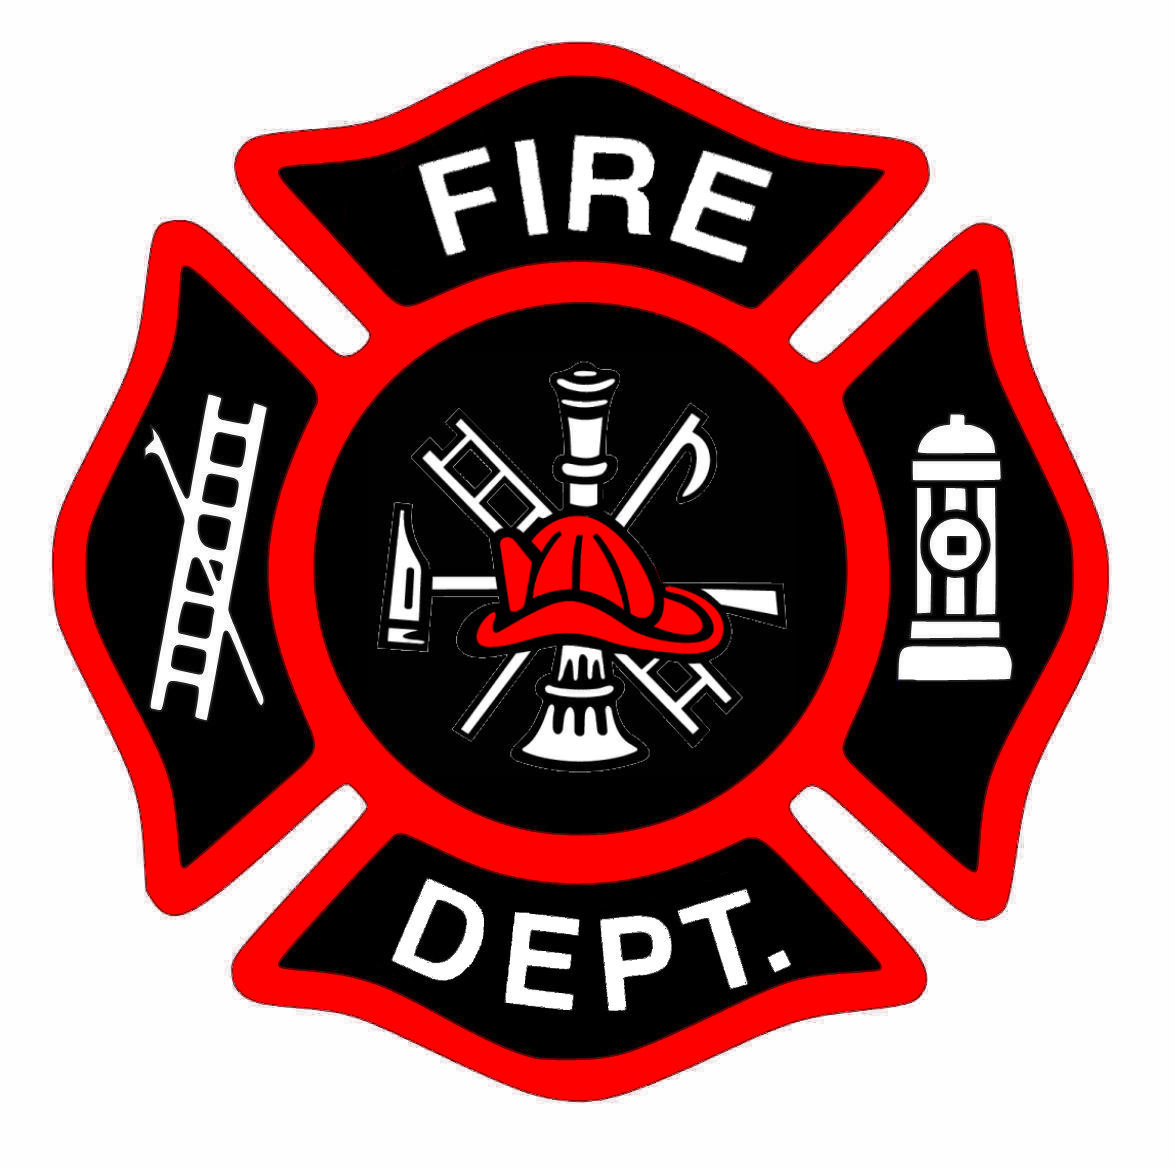 Fireman bage new red. Firetruck clipart fire marshal